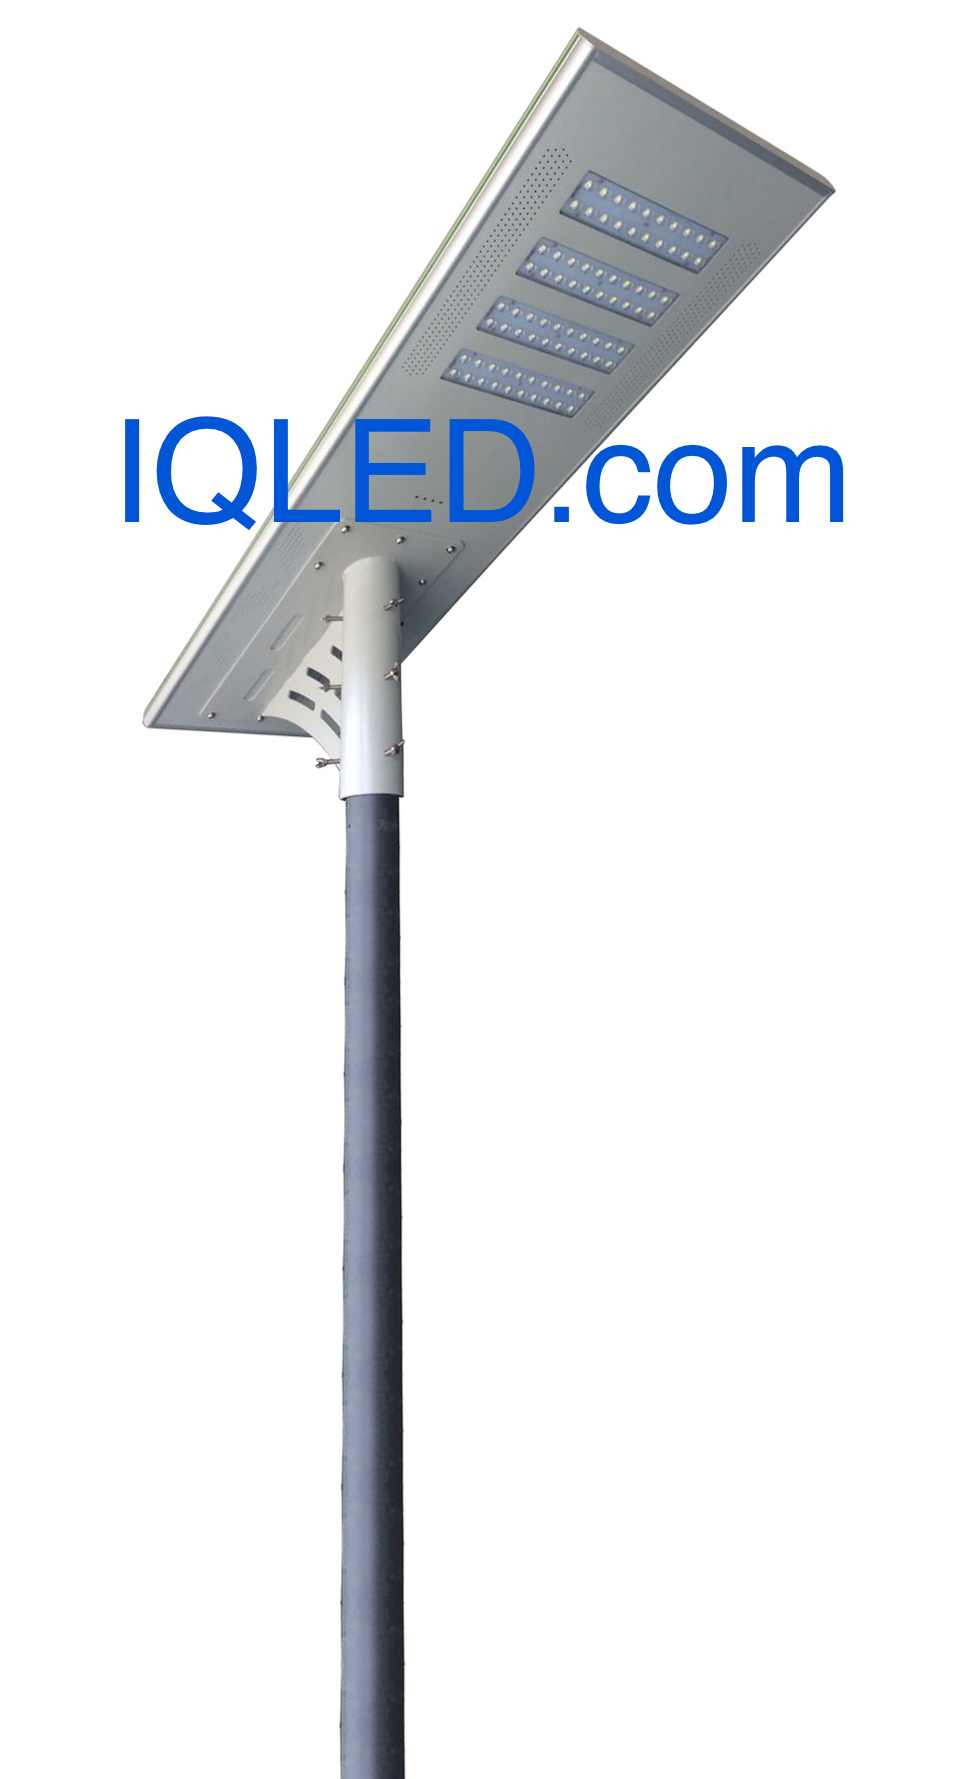 IQLED.com Solar Light LED Integrated 8800 Lumens 80 Watts